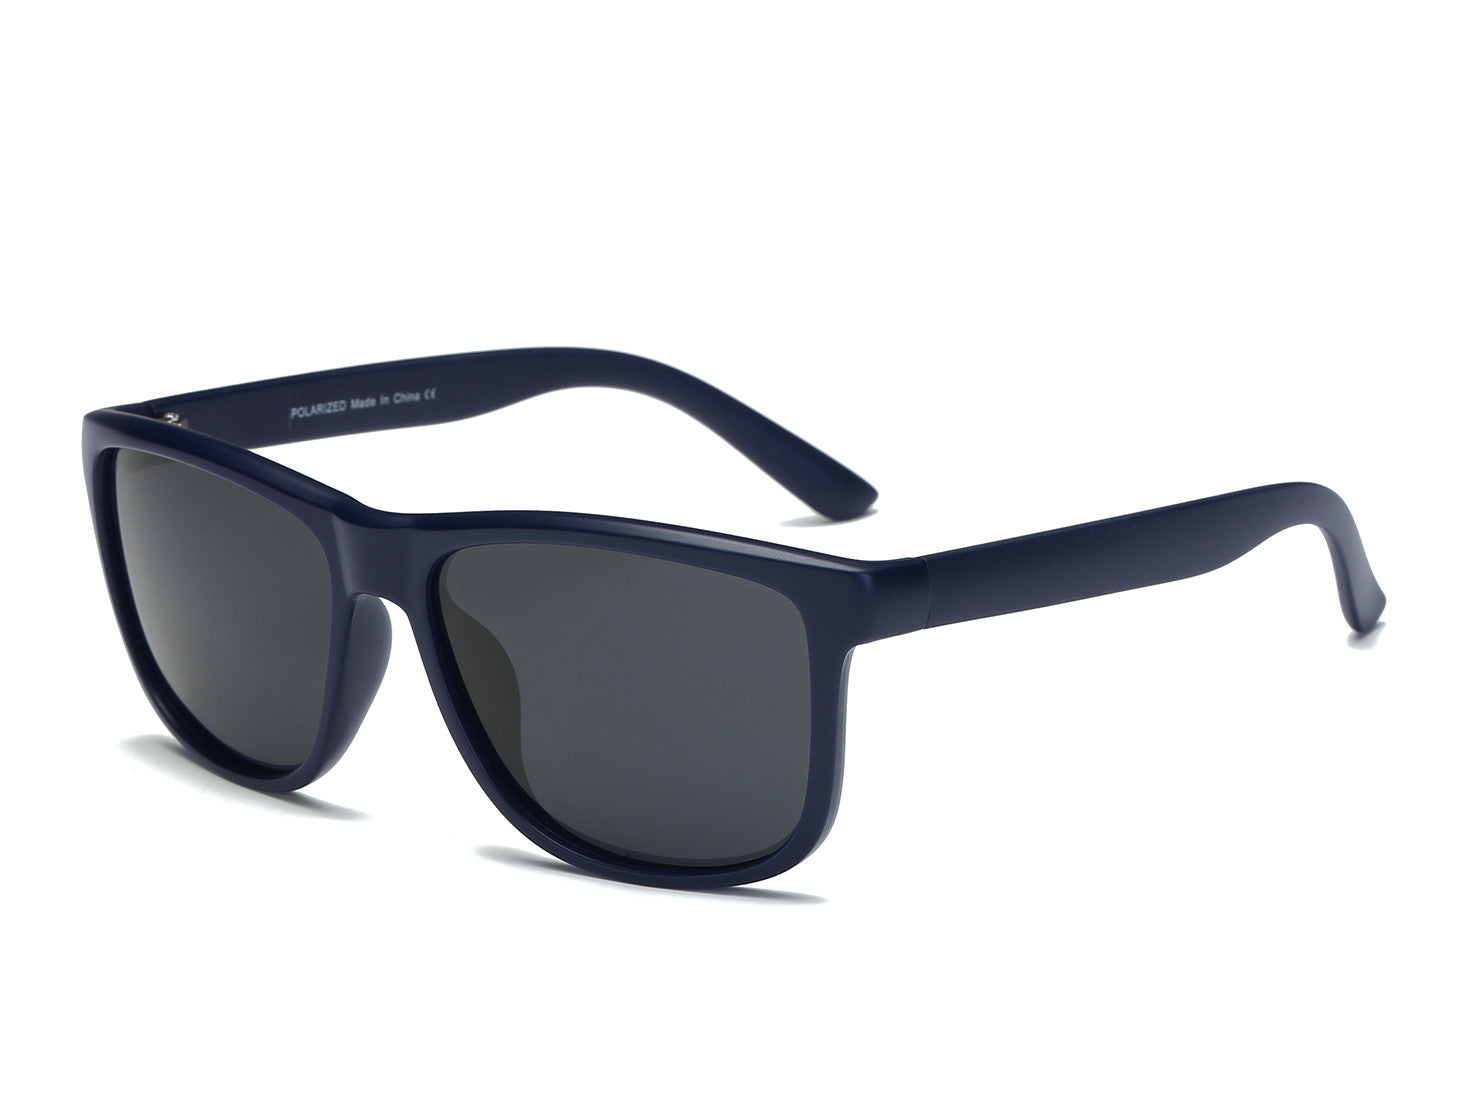 P1001 - Square Retro Polarized Flat Top Sunglasses Navy Blue